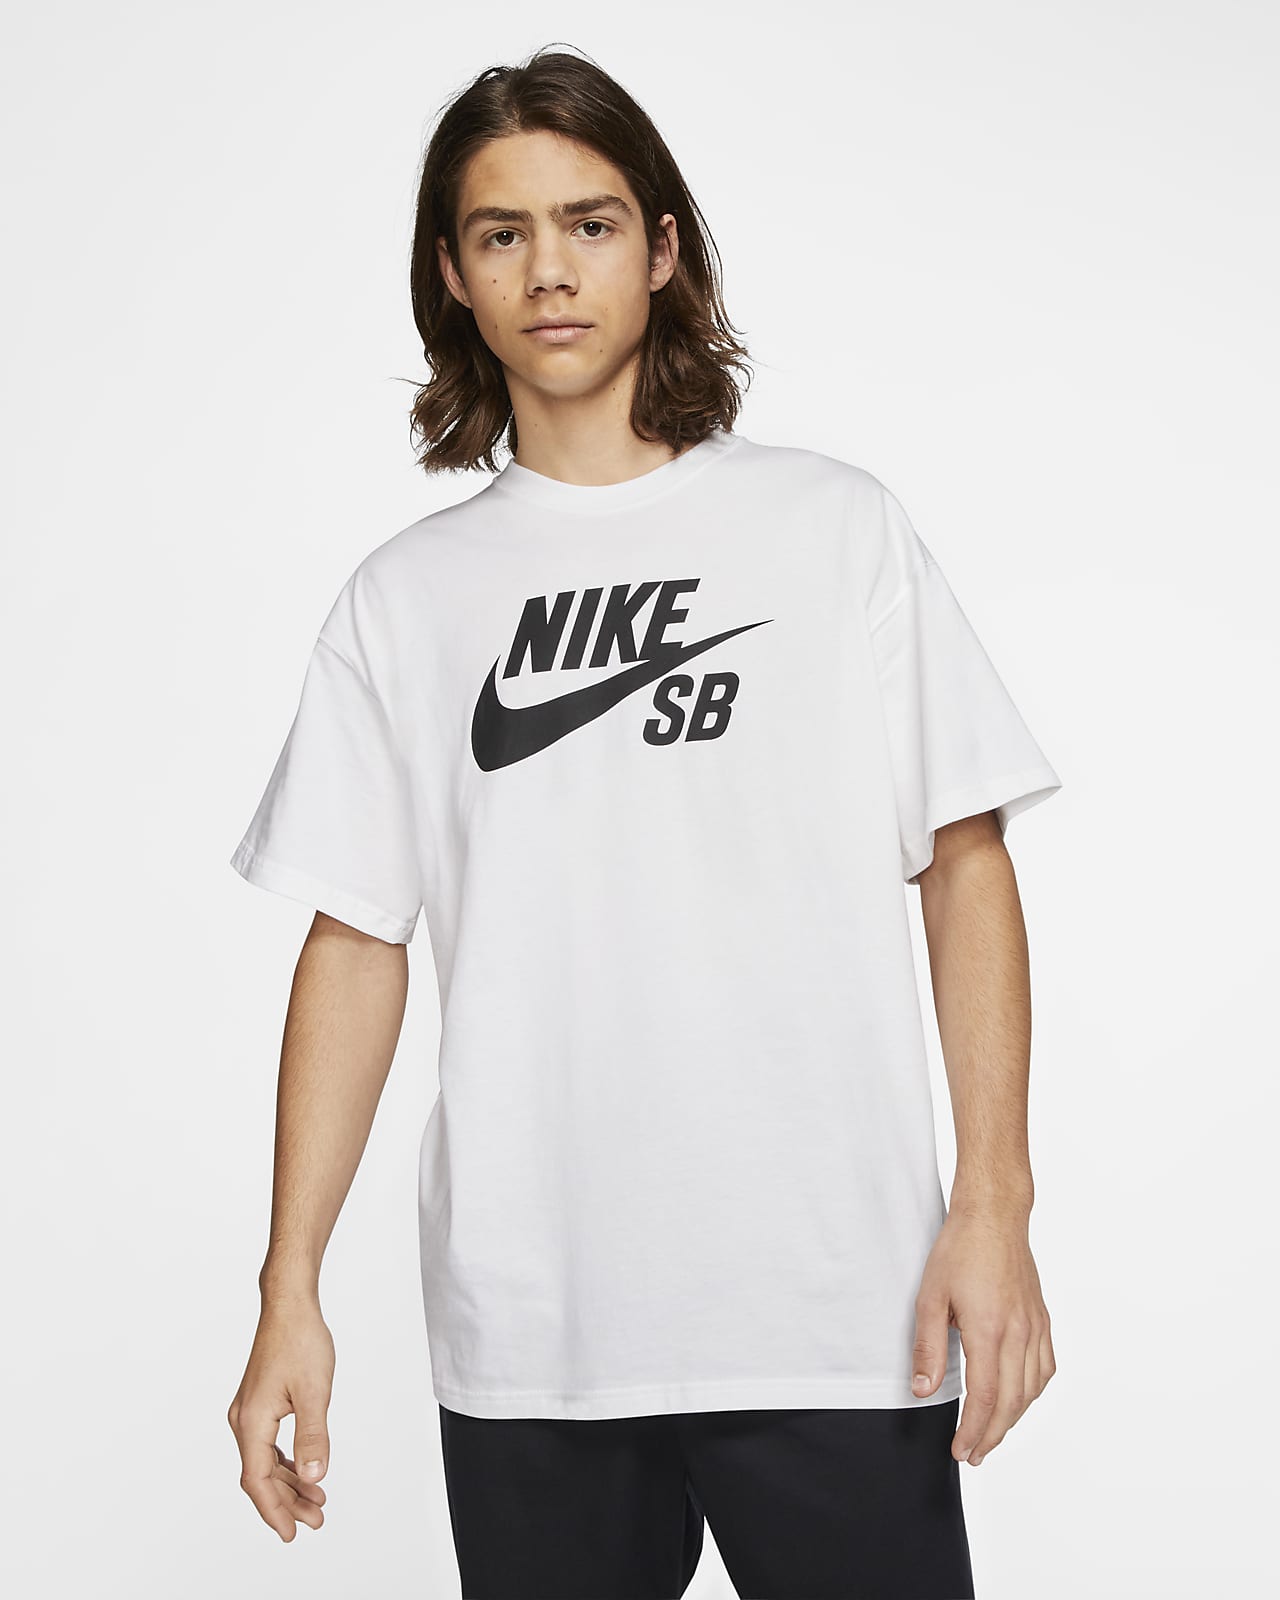 Consciente Abuelo Interpretación Playera de skateboarding con logotipo Nike SB. Nike MX